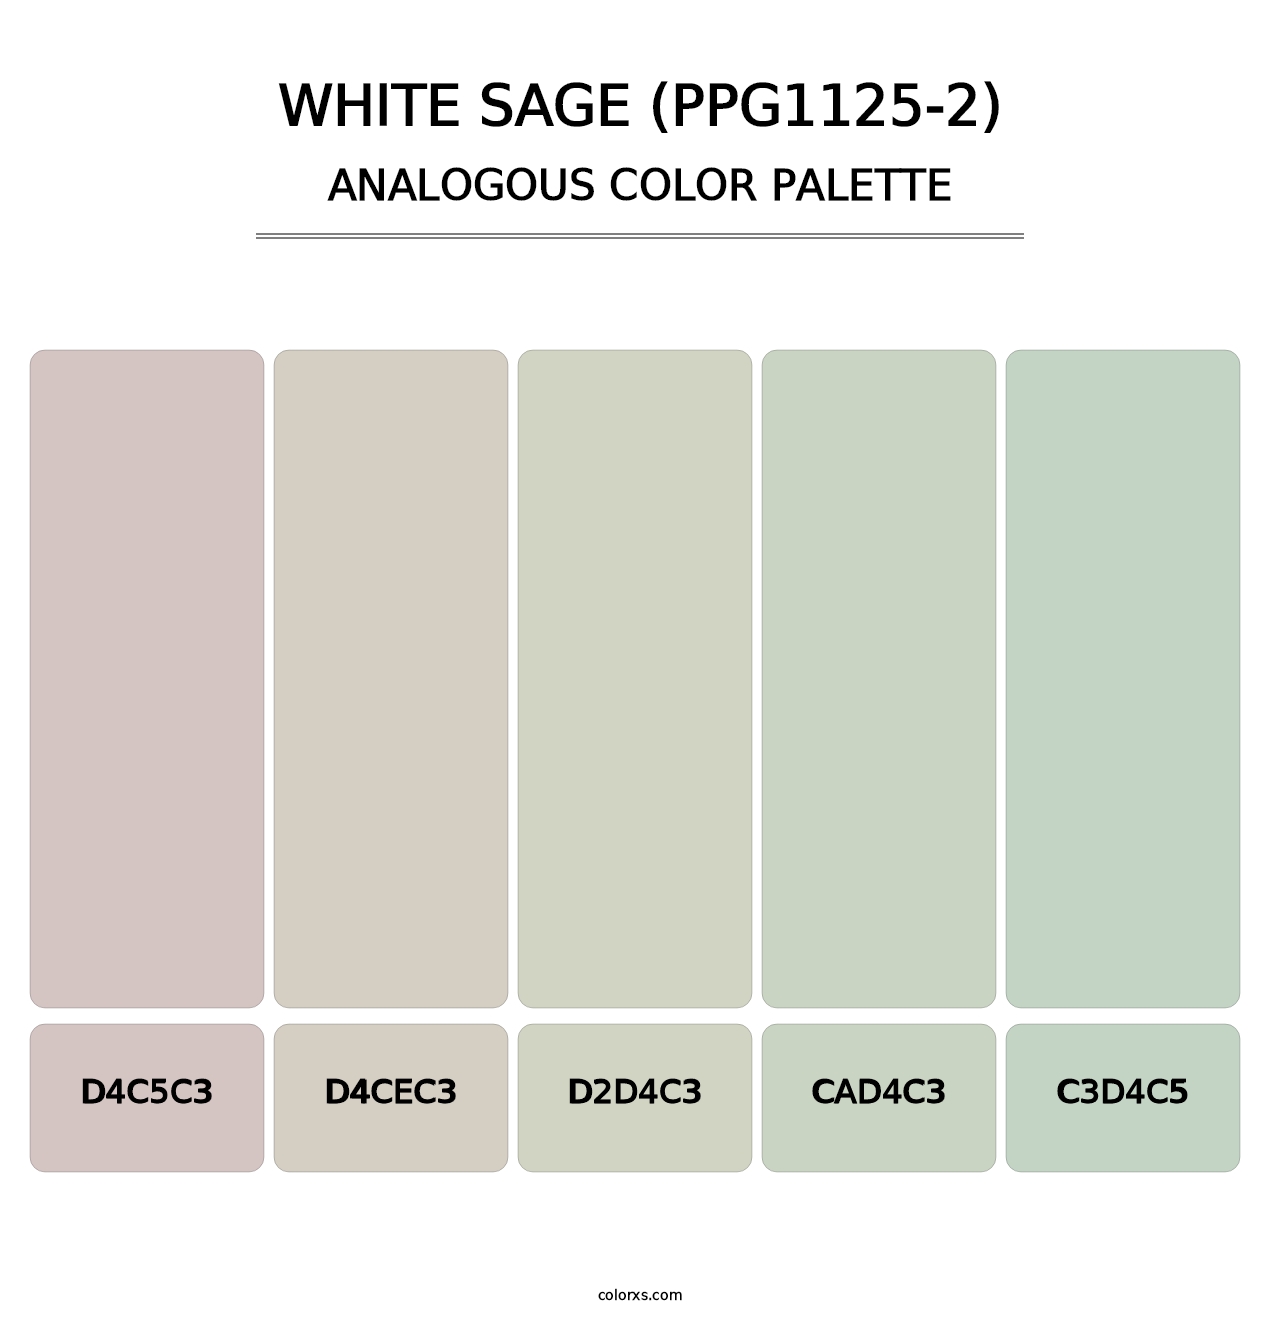 White Sage (PPG1125-2) - Analogous Color Palette